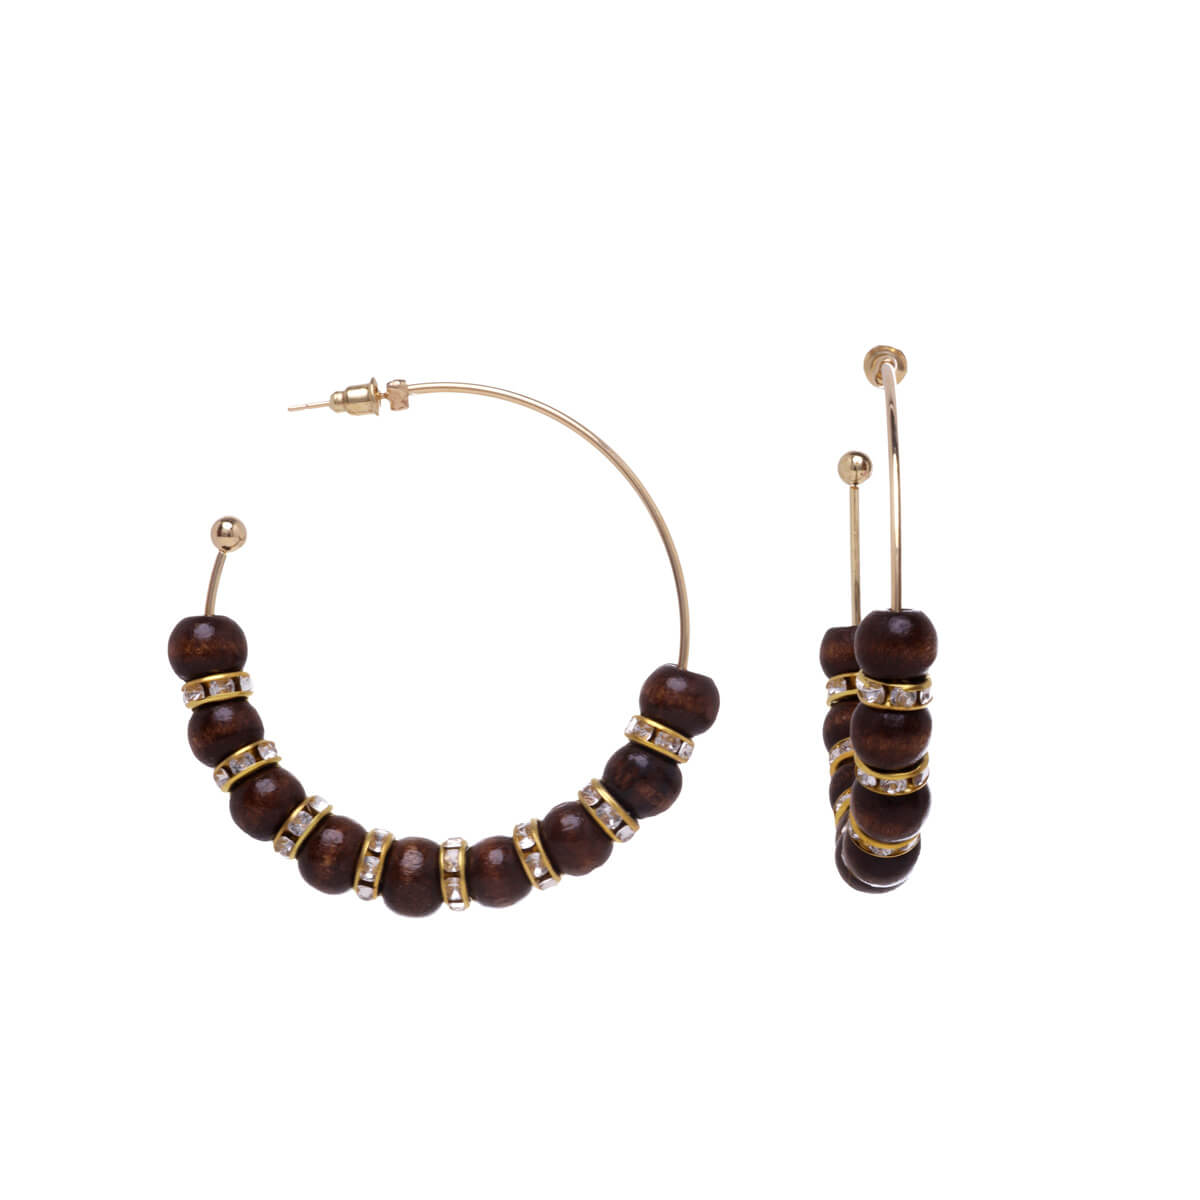 Bead earrings with glittering stones